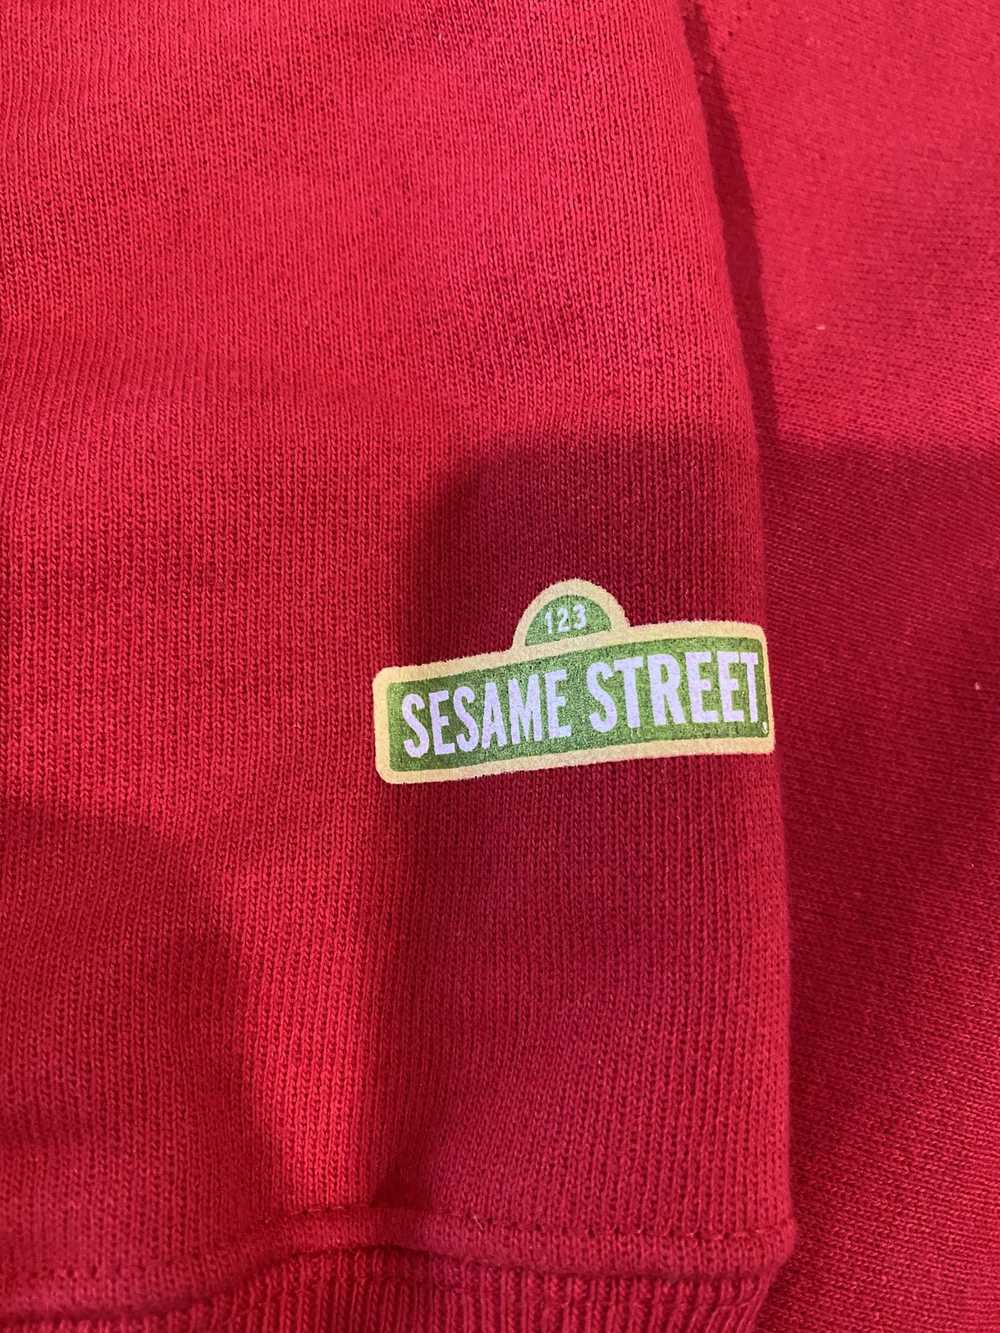 Champion Champion x Sesame Street Elmo Hoodie - image 5